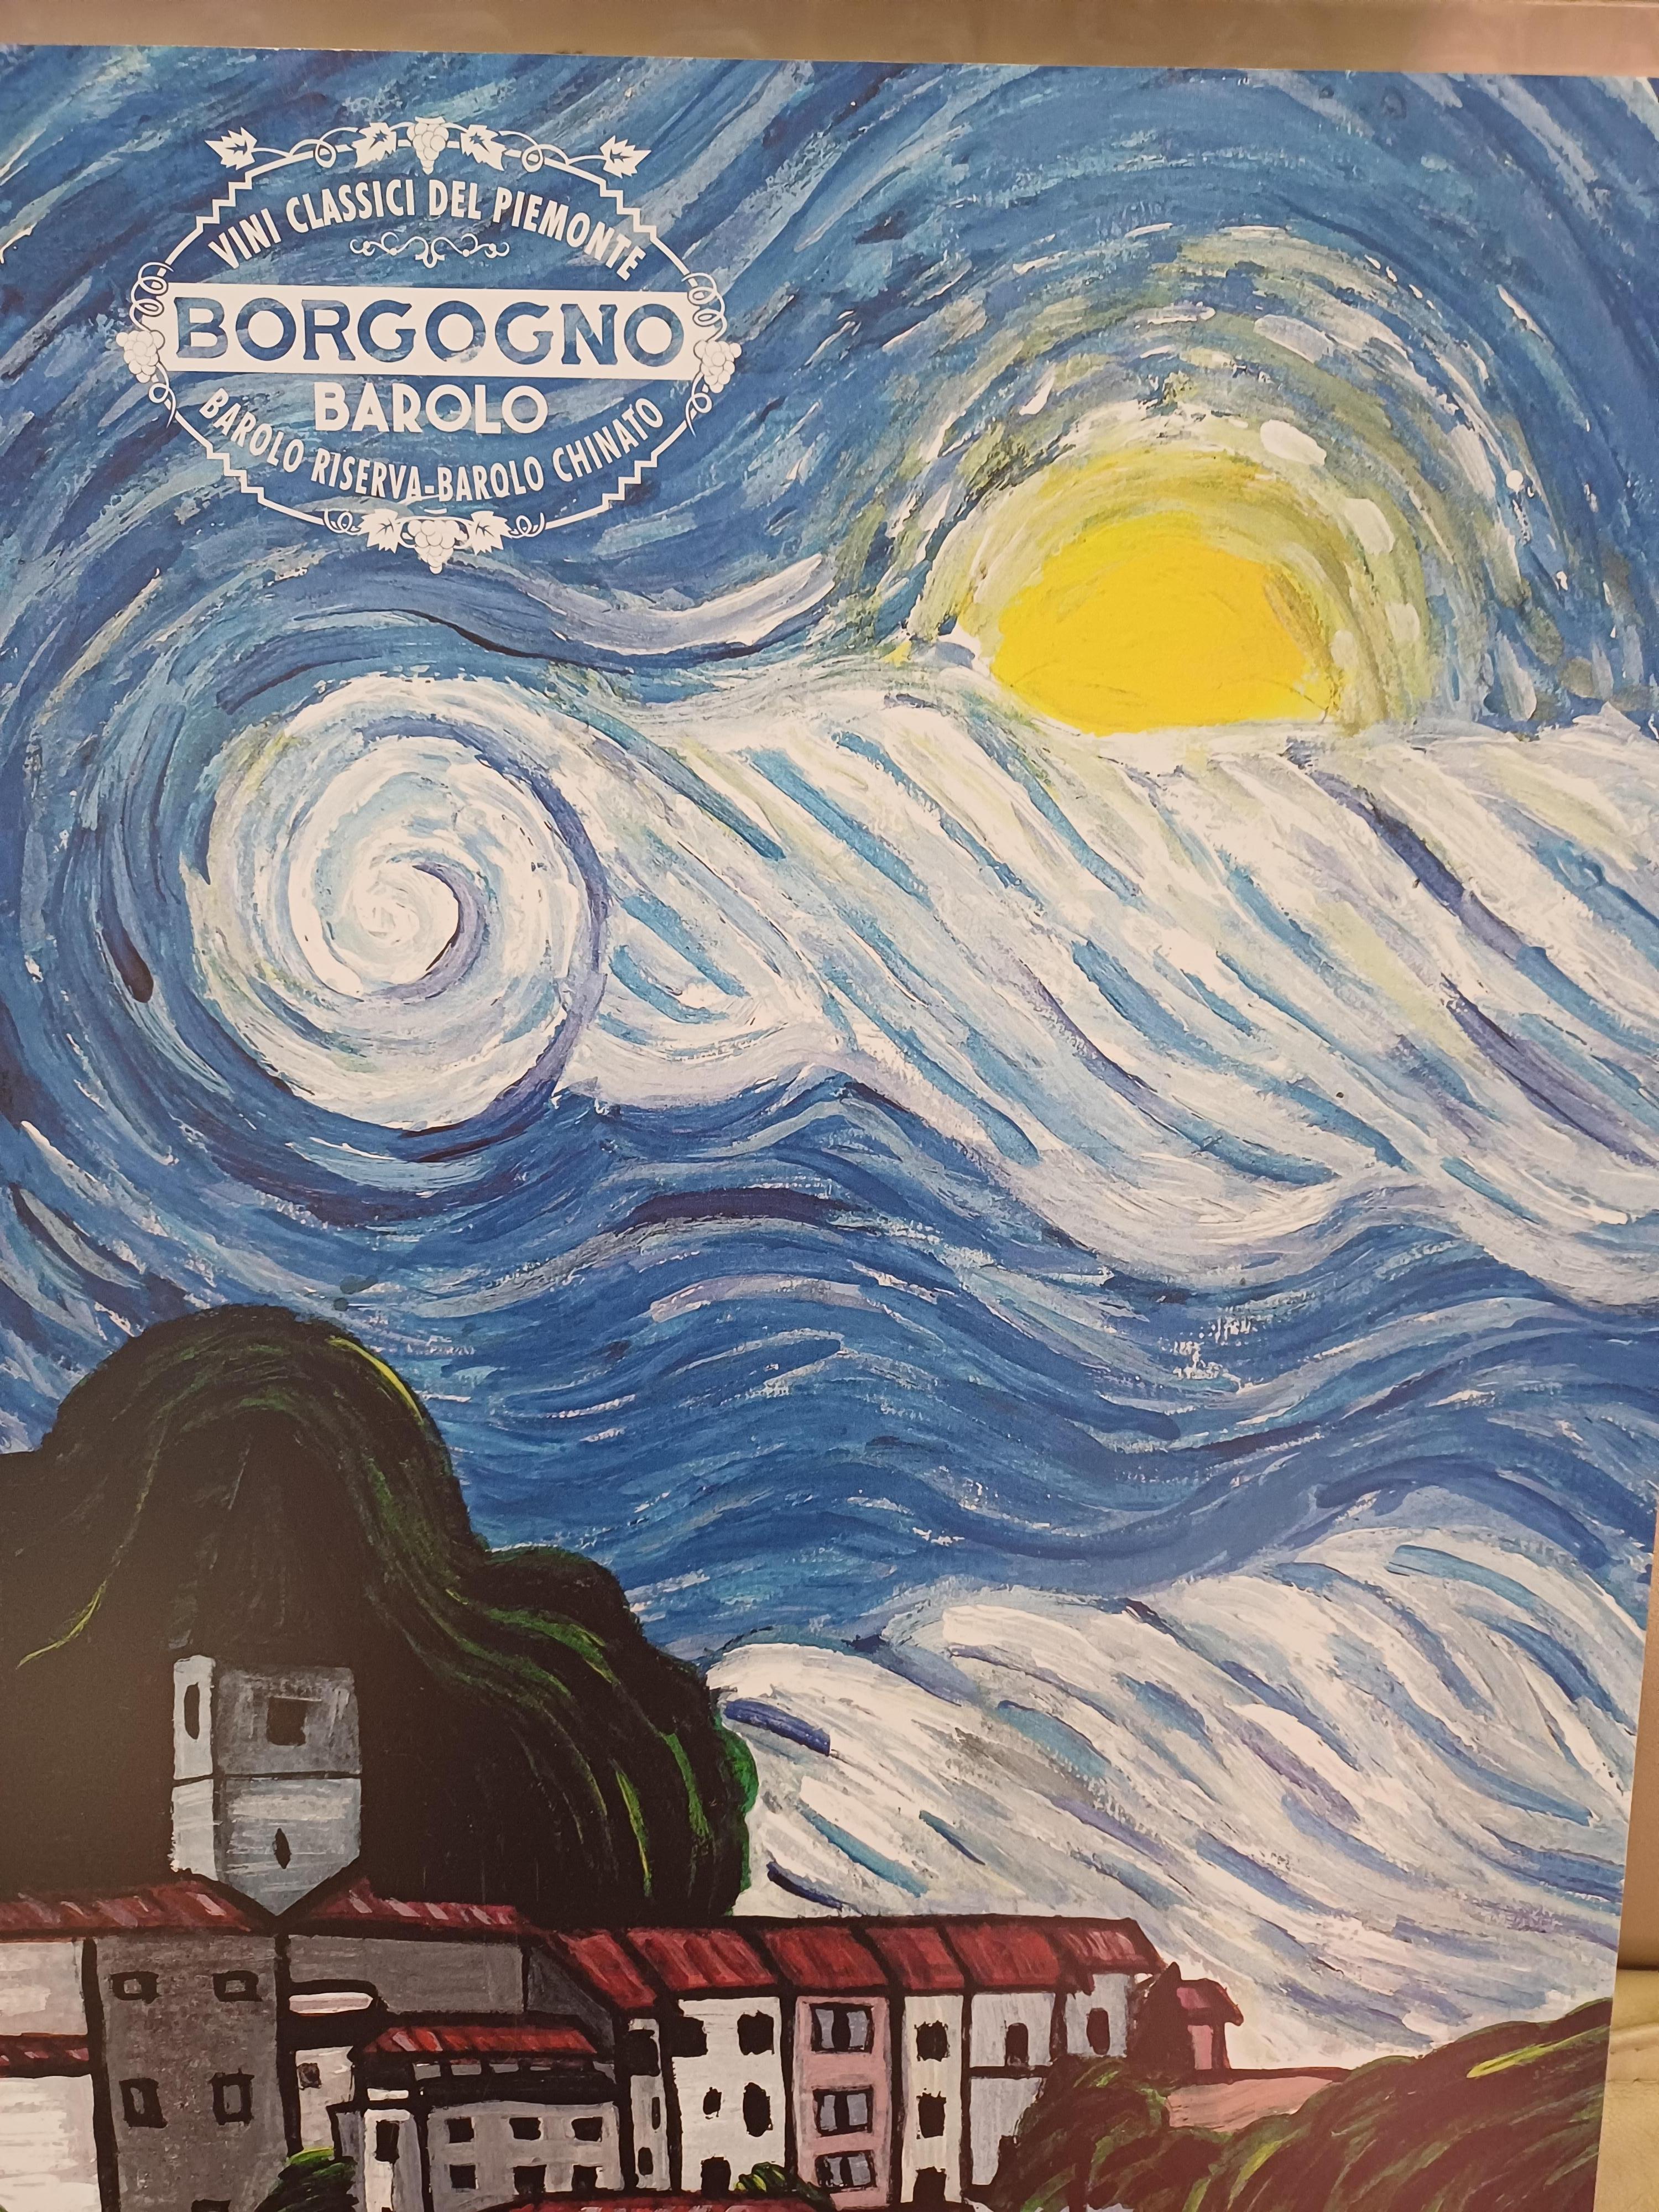 Borgogno Barolo Italiano Plakat.
Elegantes Poster auf Laminat, bereit zum Aufhängen an der Wand.
